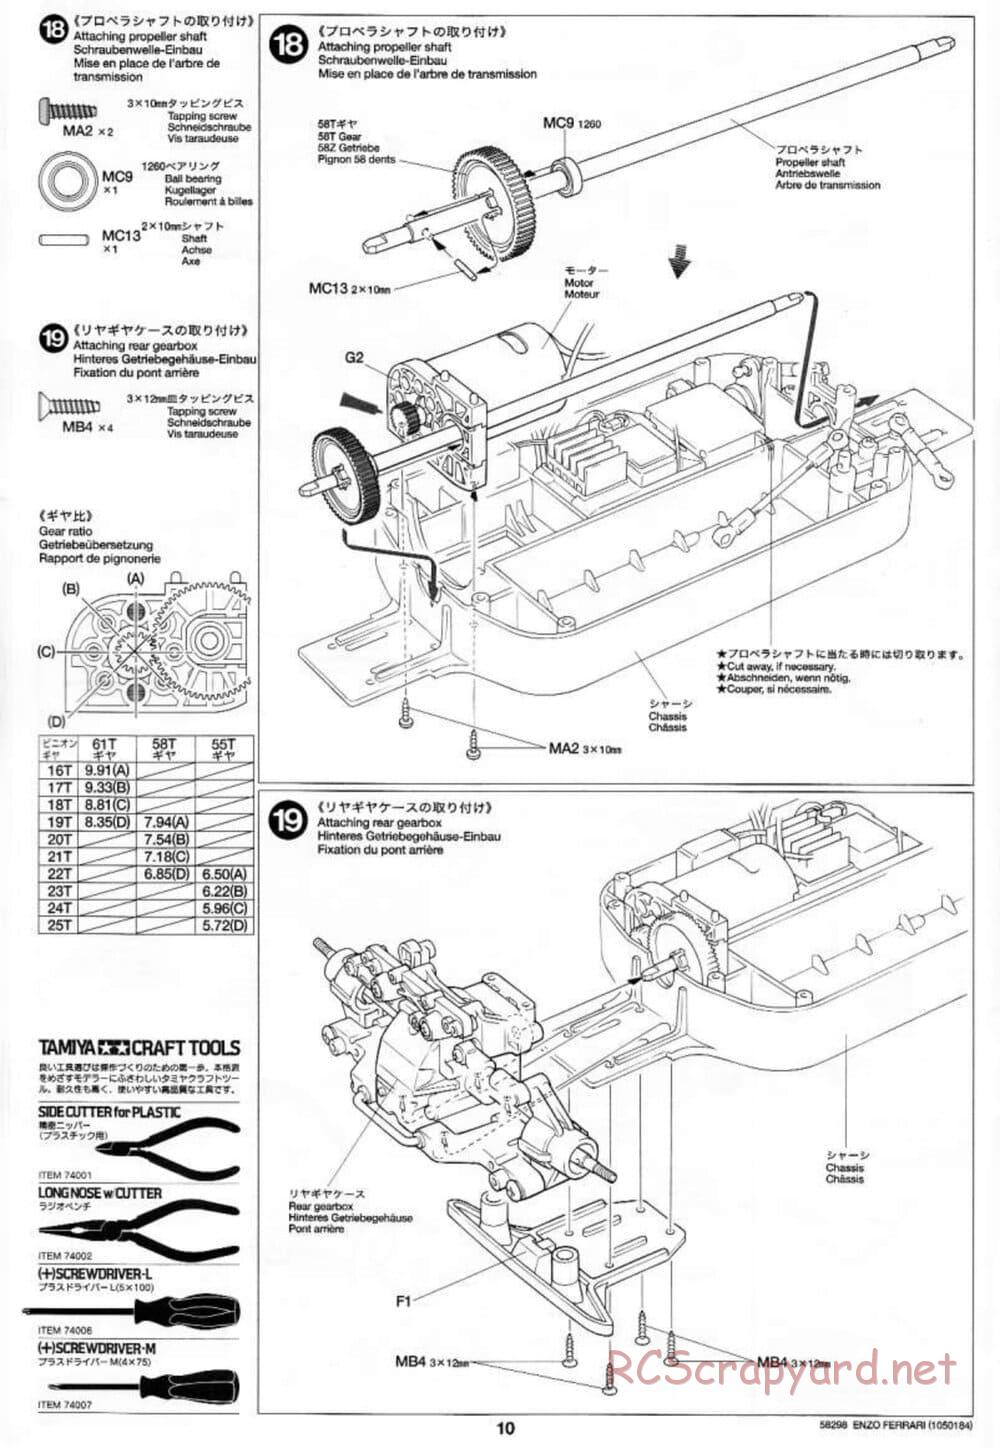 Tamiya - Enzo Ferrari - TB-01 Chassis - Manual - Page 10